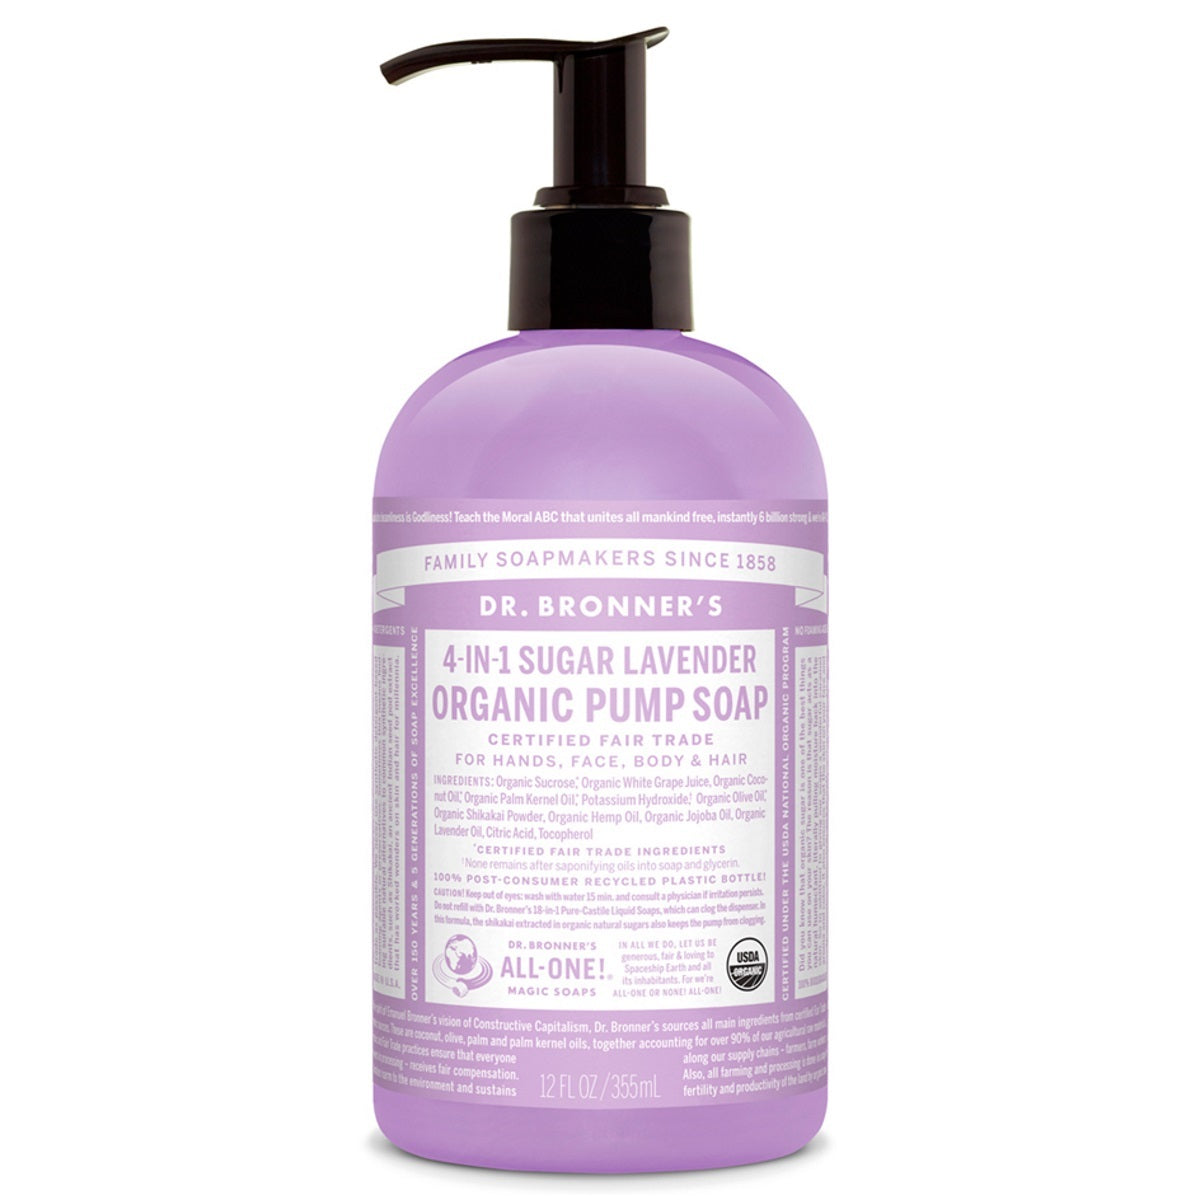 Primary image of Sugar Lavender Organic Pump Soap